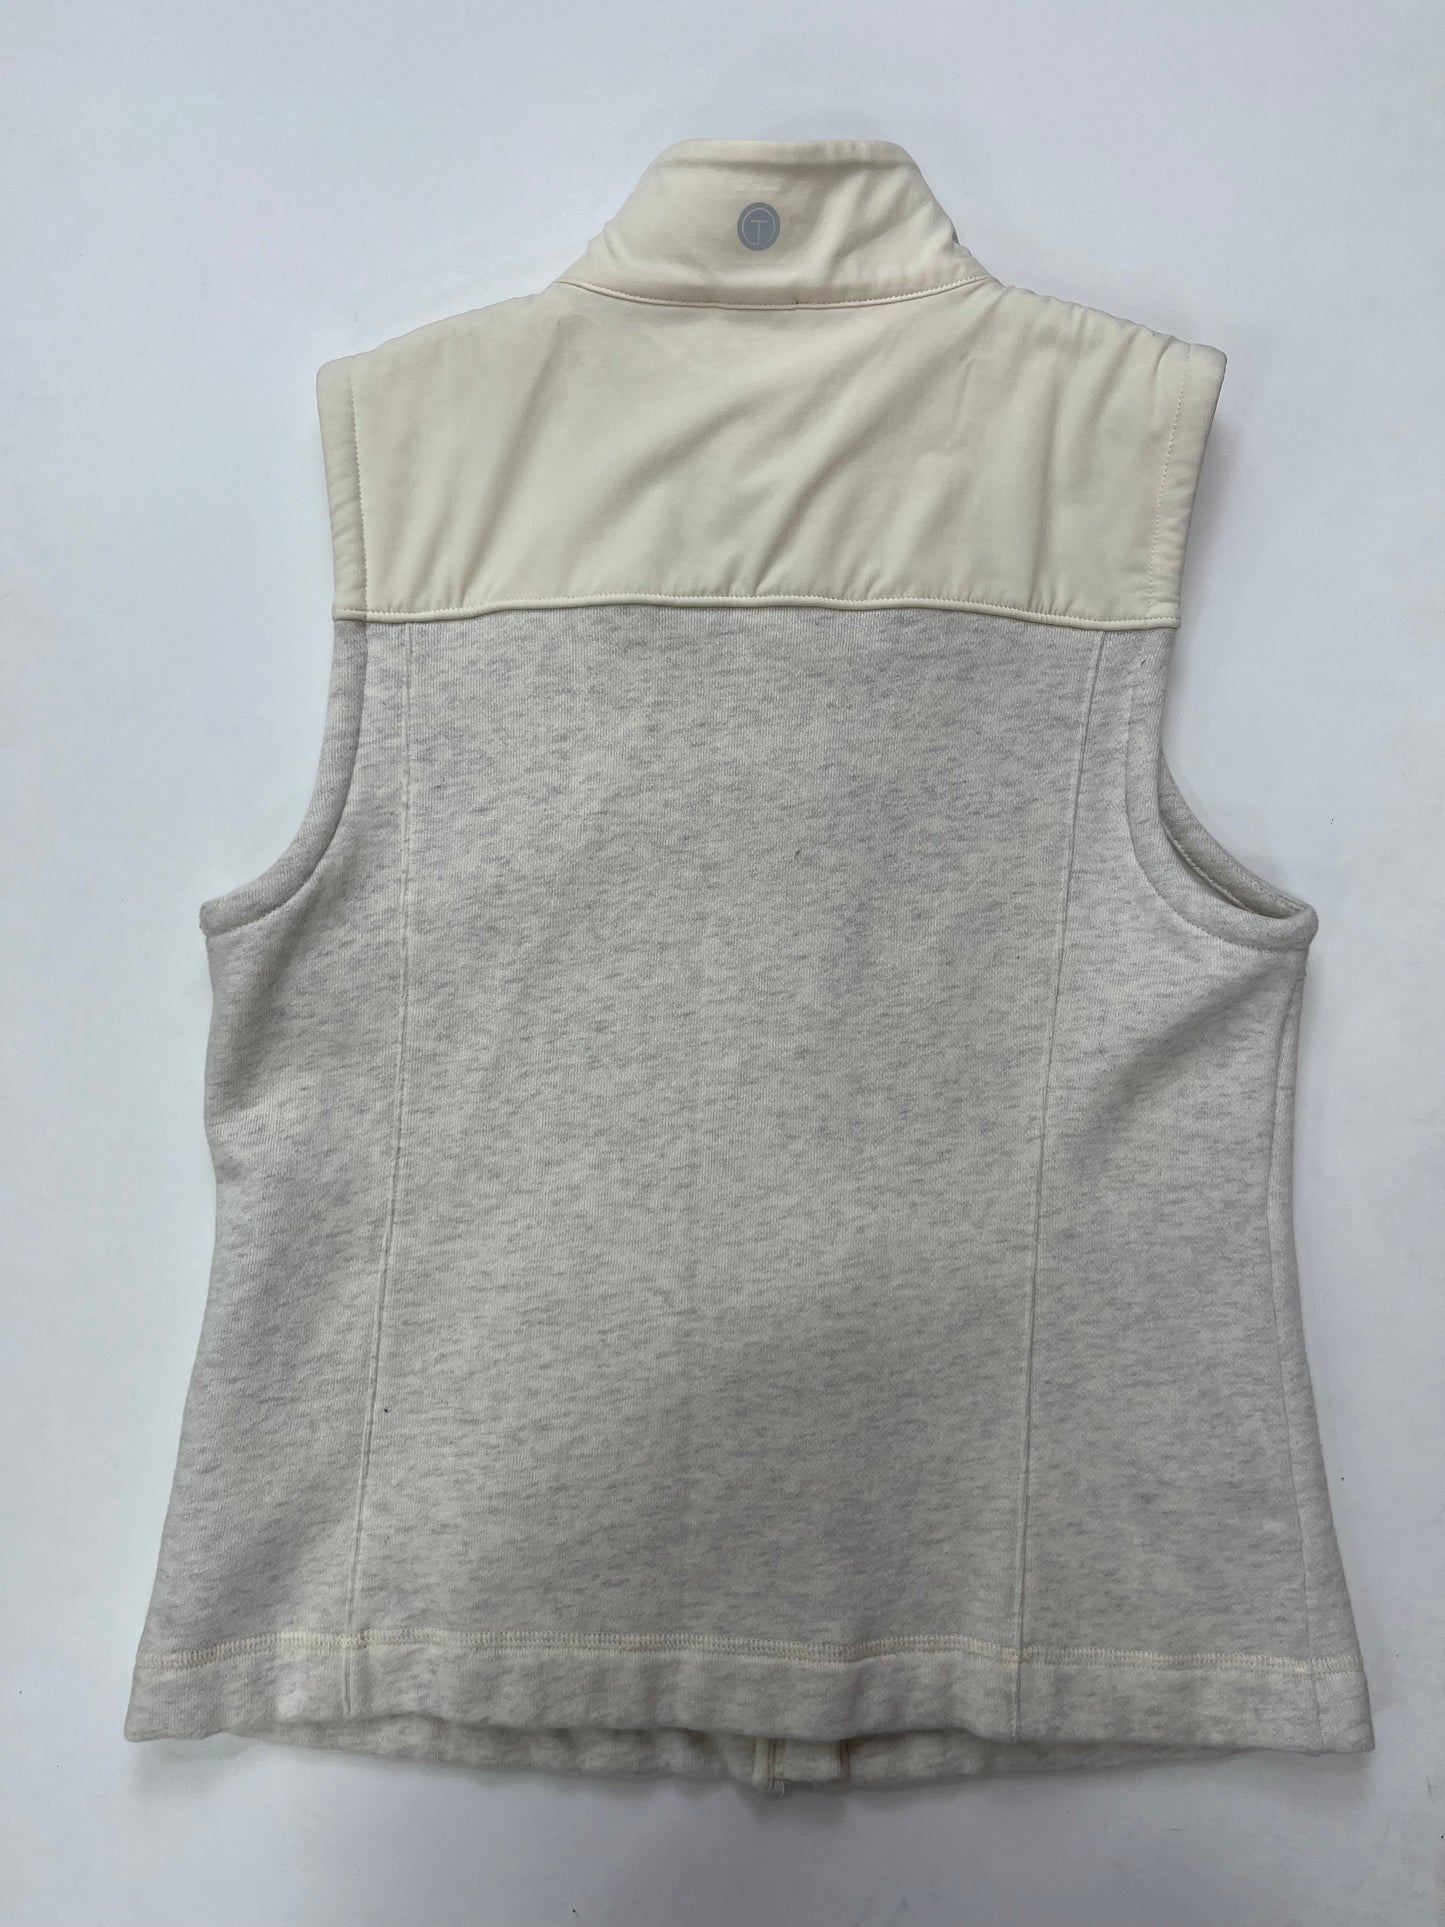 Vest Fleece By Talbots  Size: Petite  Medium